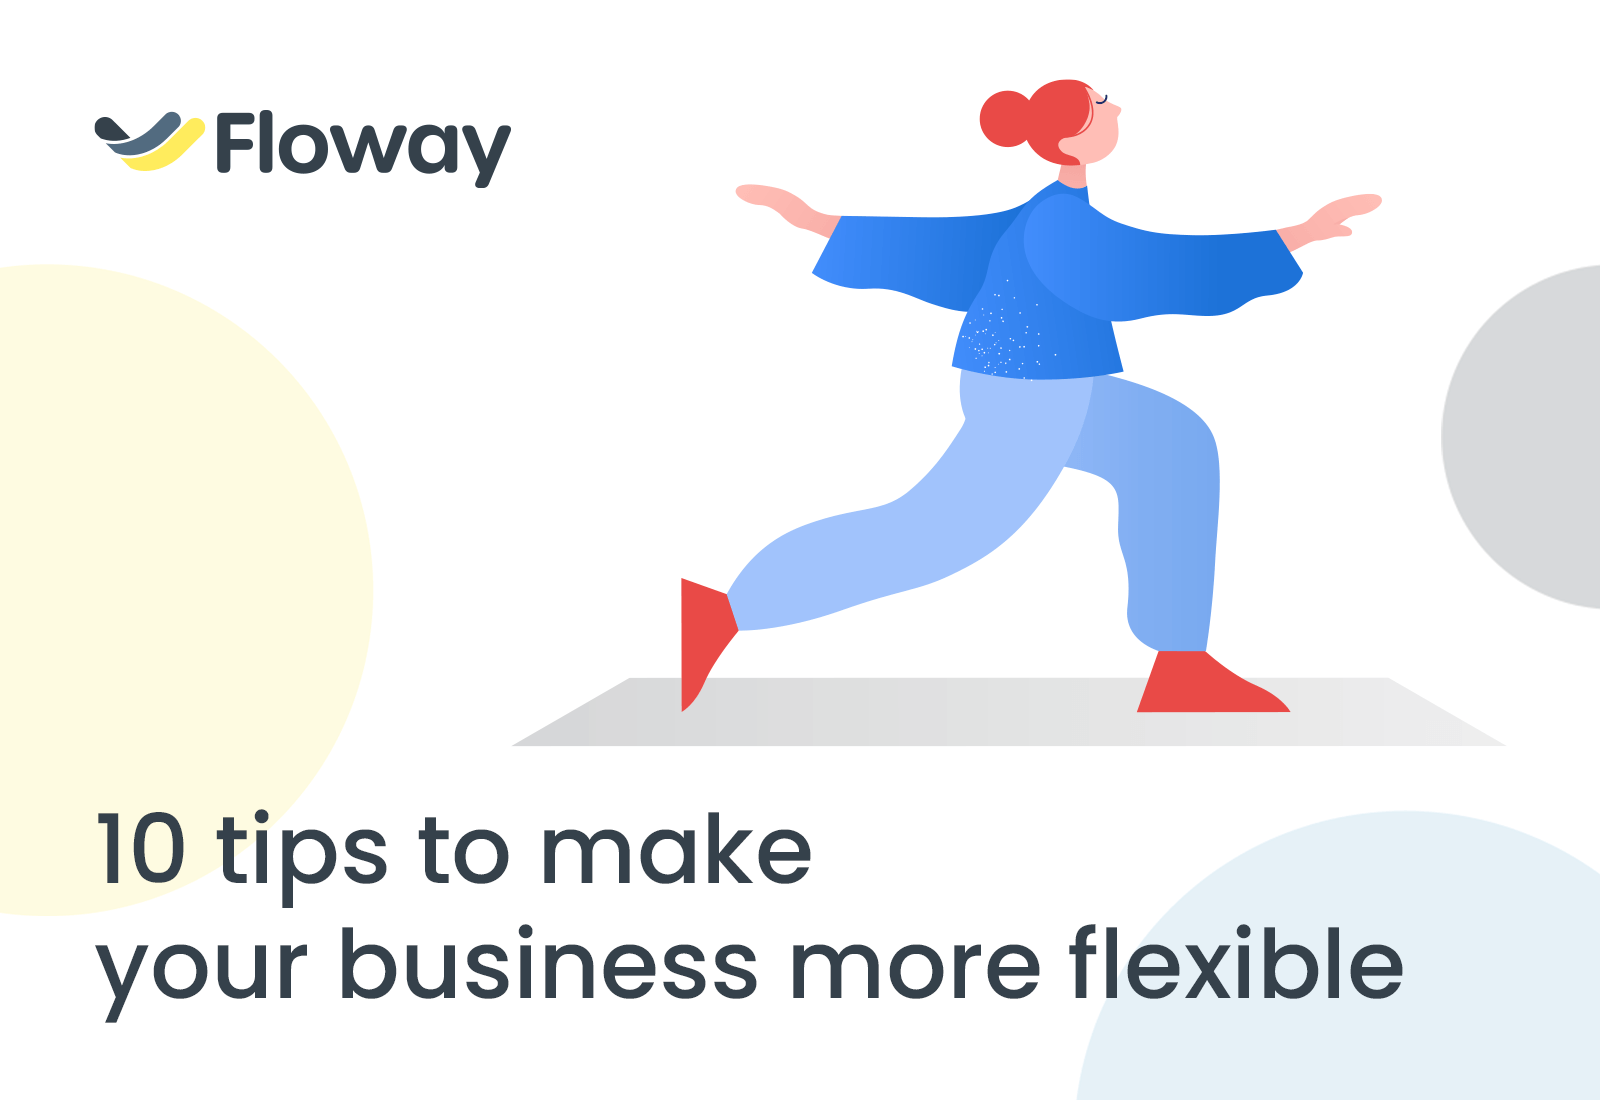 Flexible business - Floway workflow